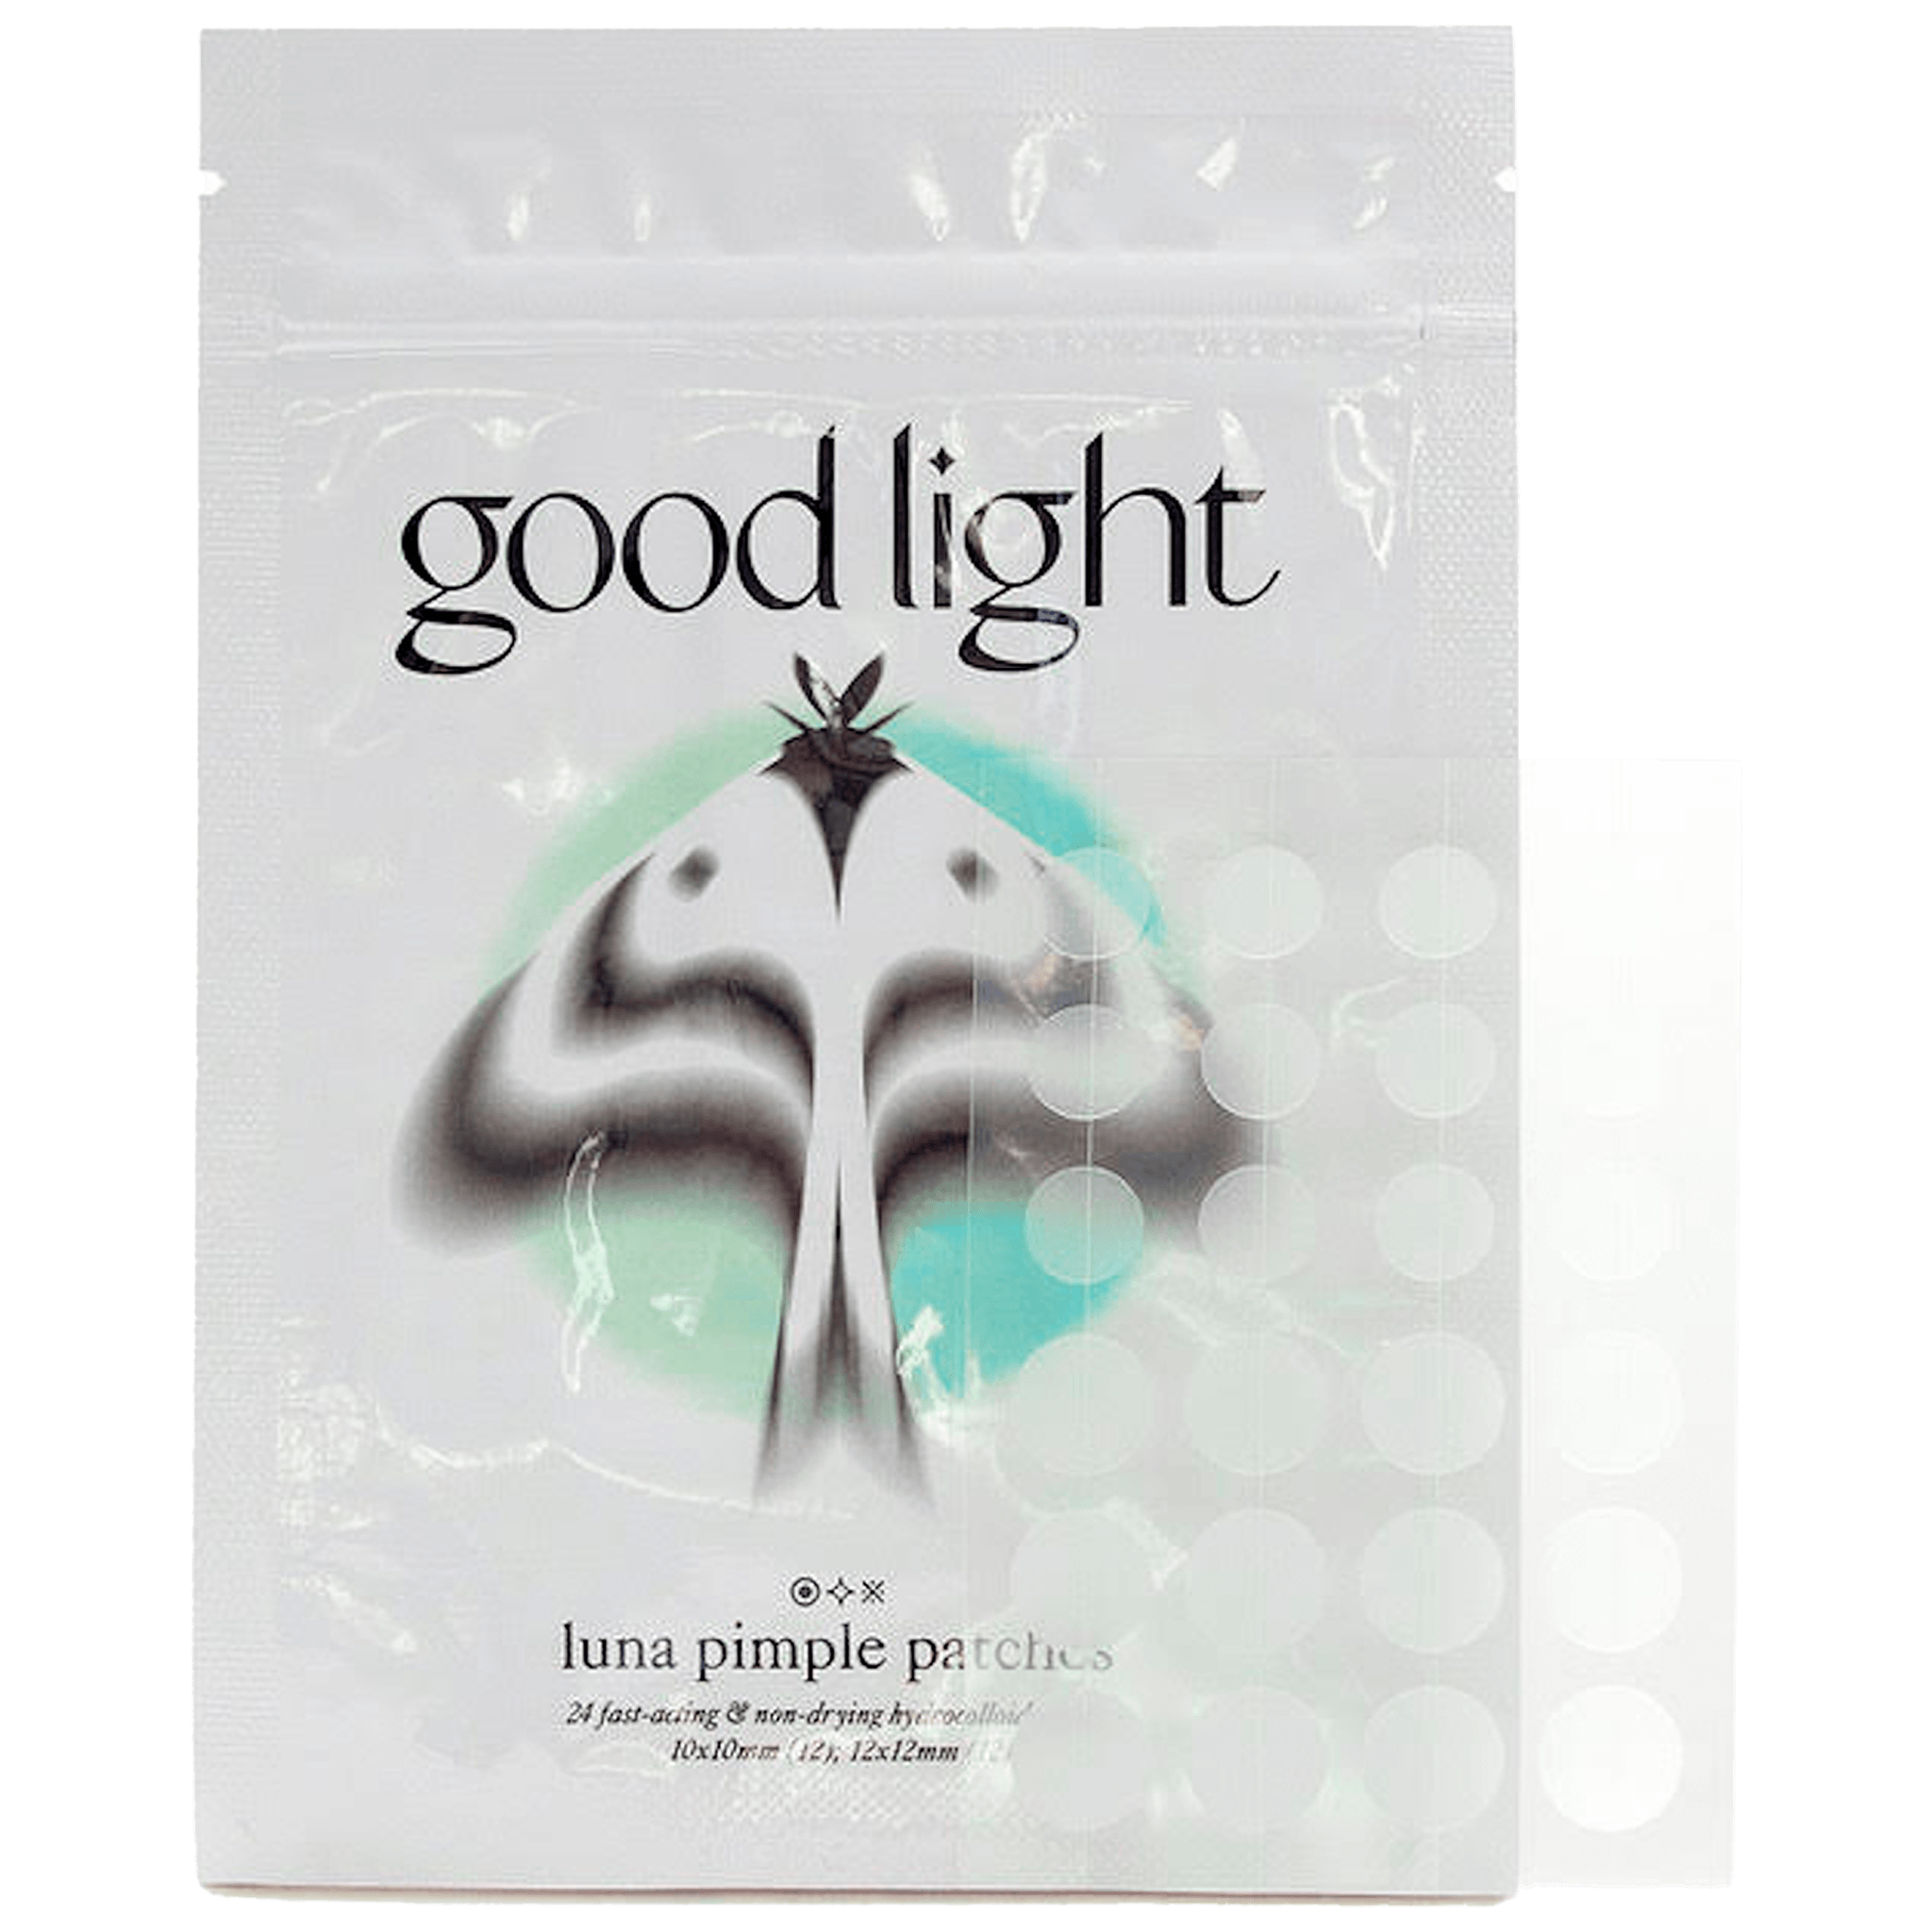 Luna Pimple Patches - good light - Consumerhaus